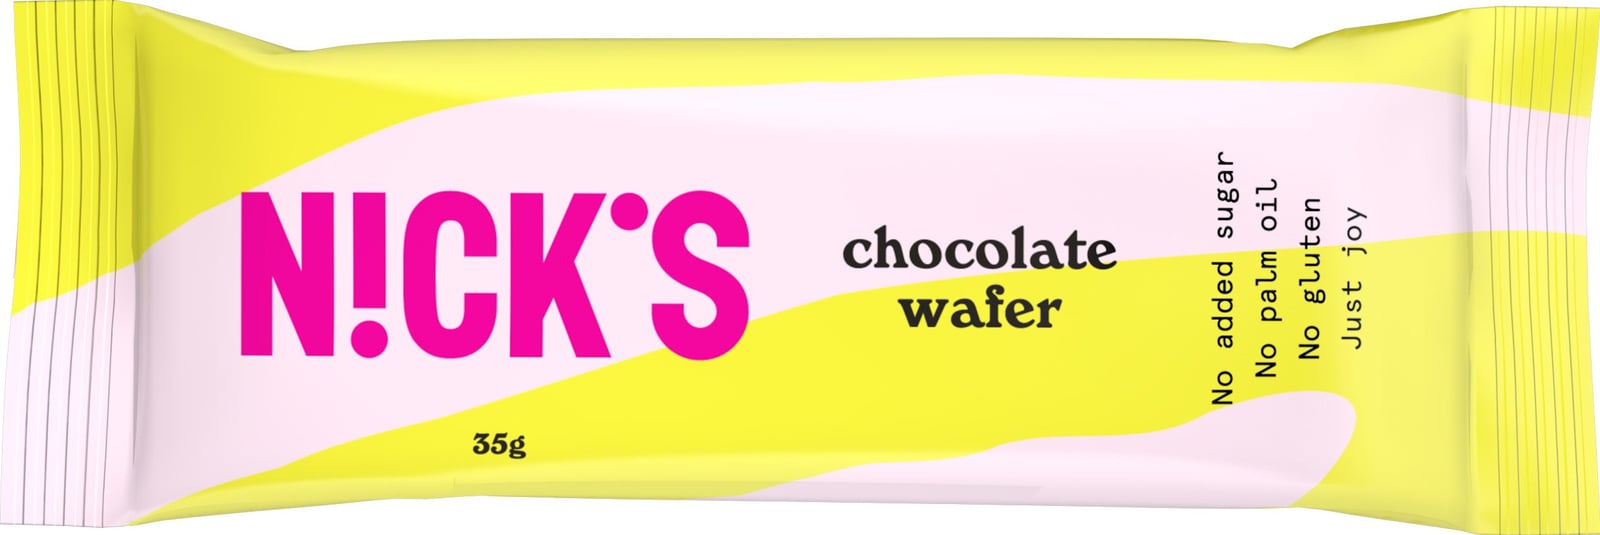 Nick's Chocolate Wafer 35g